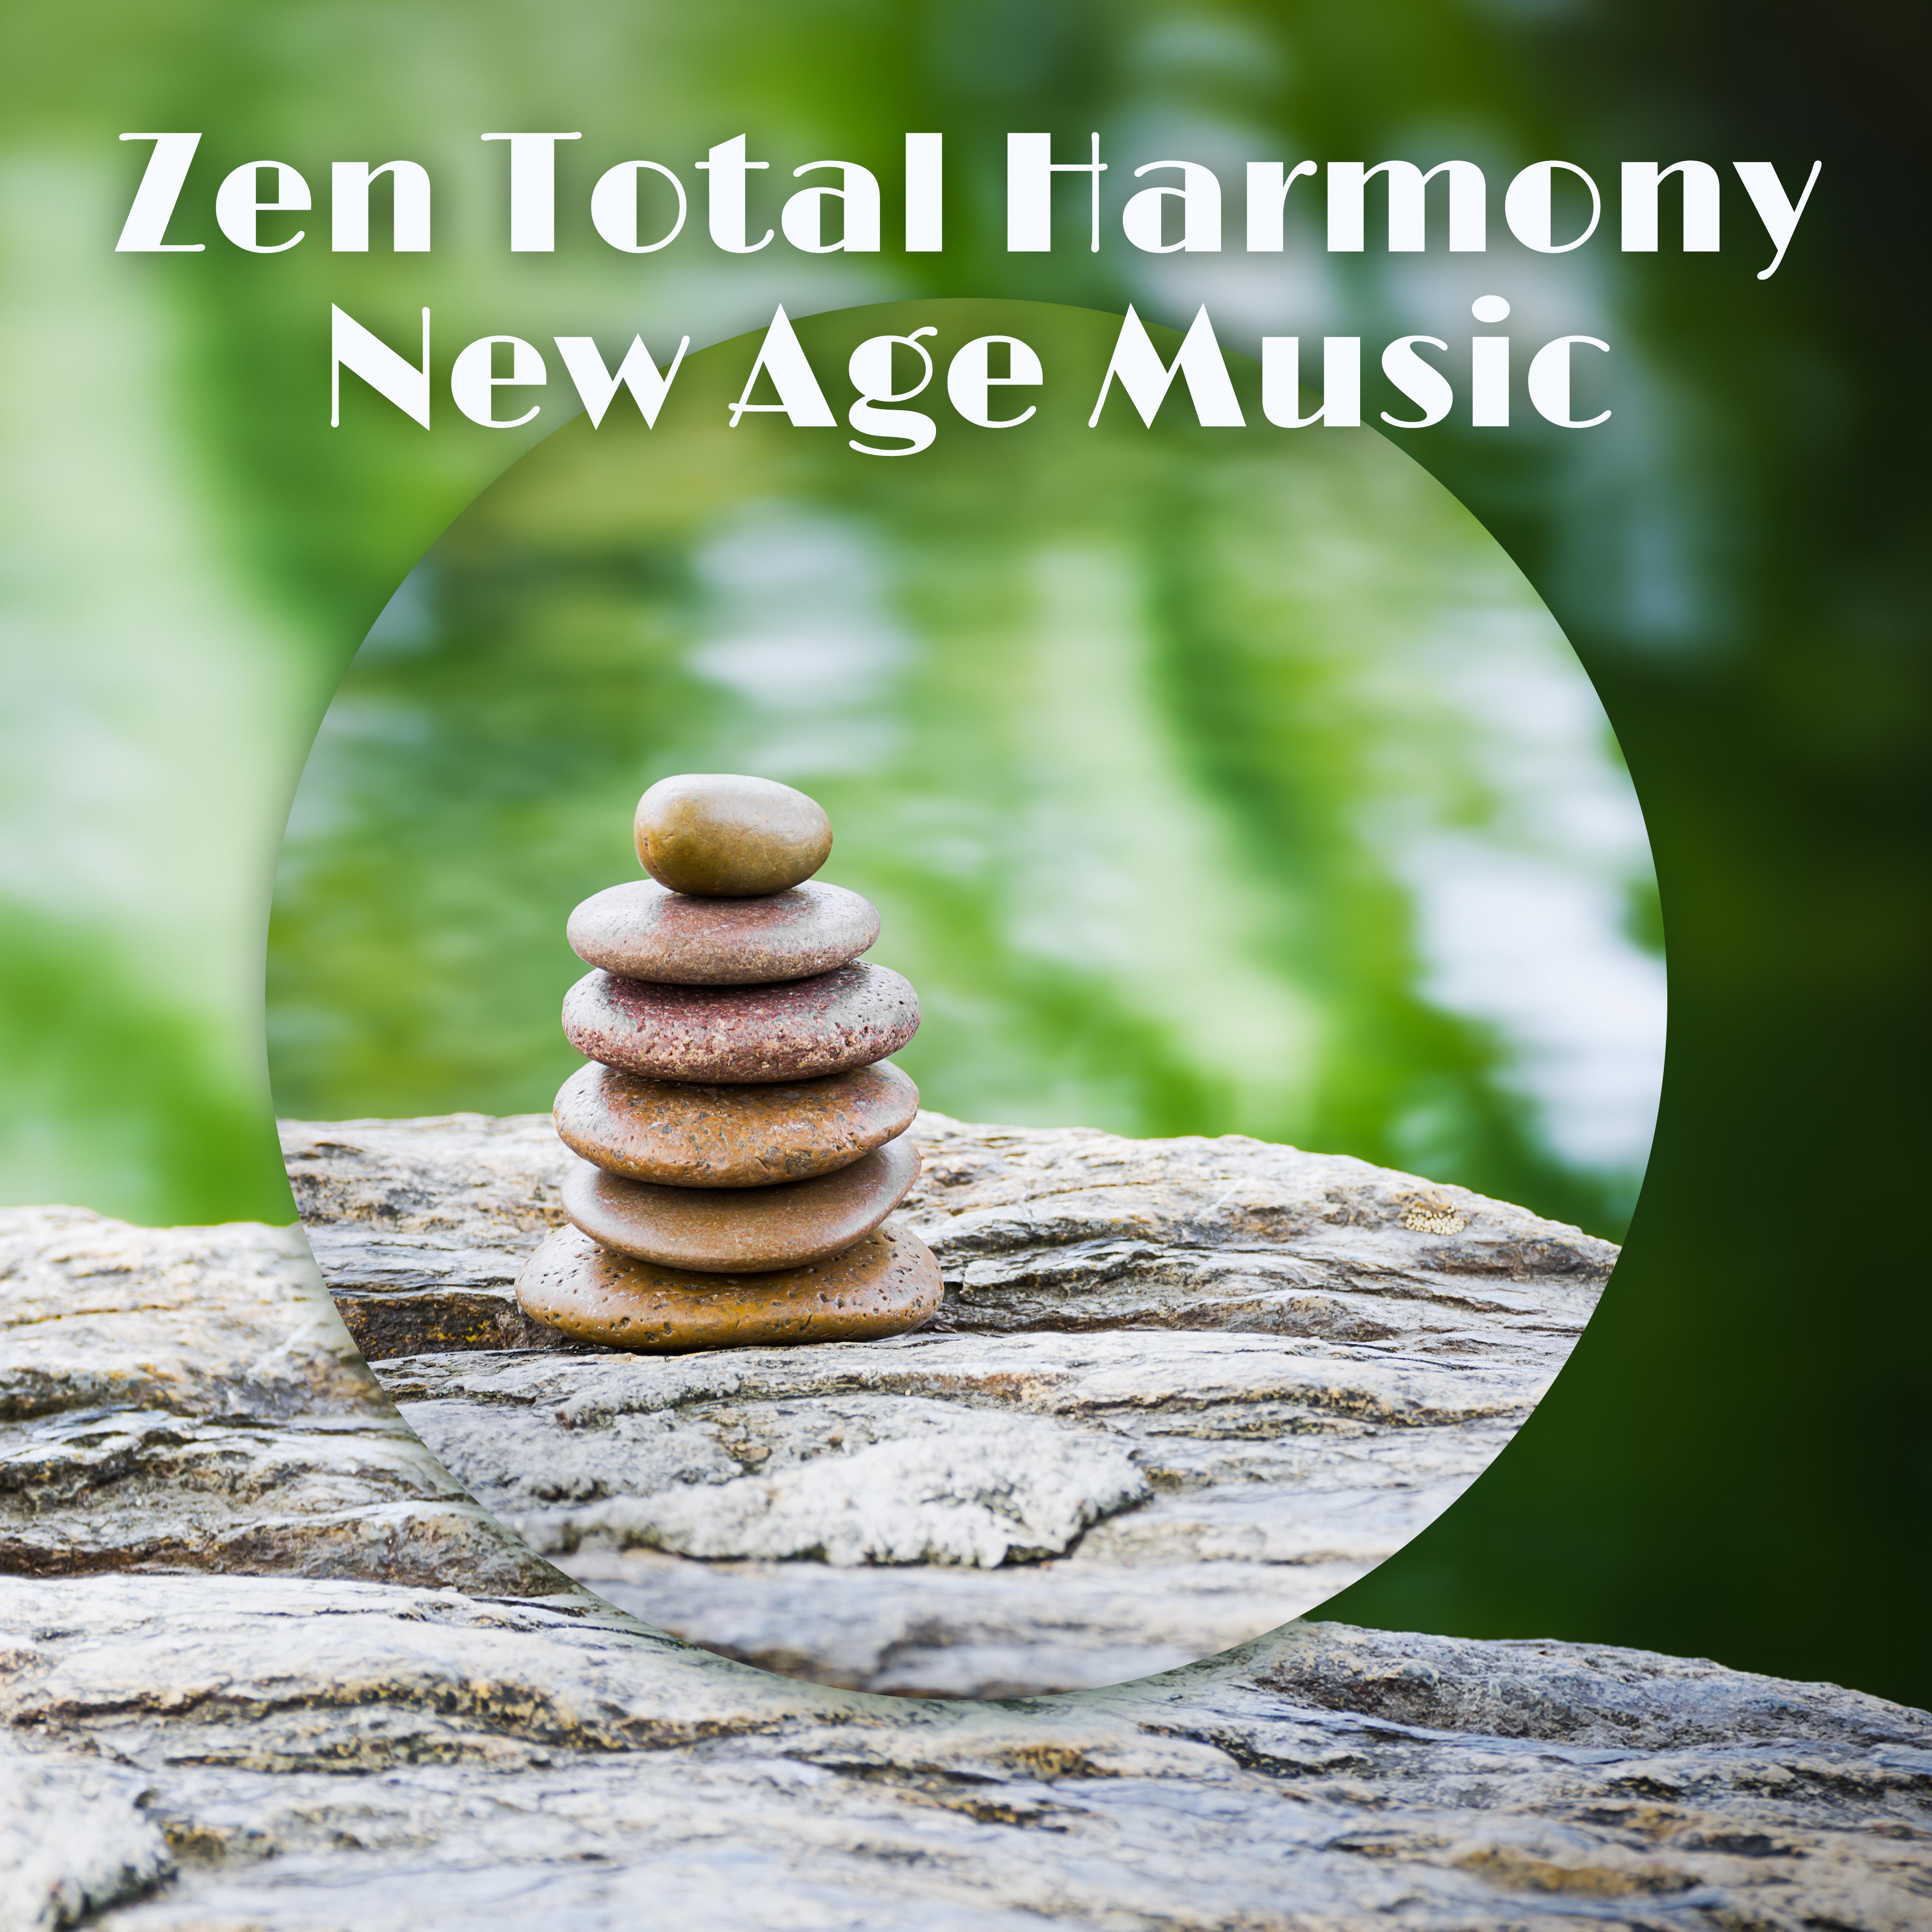 Zen Total Harmony New Age Music